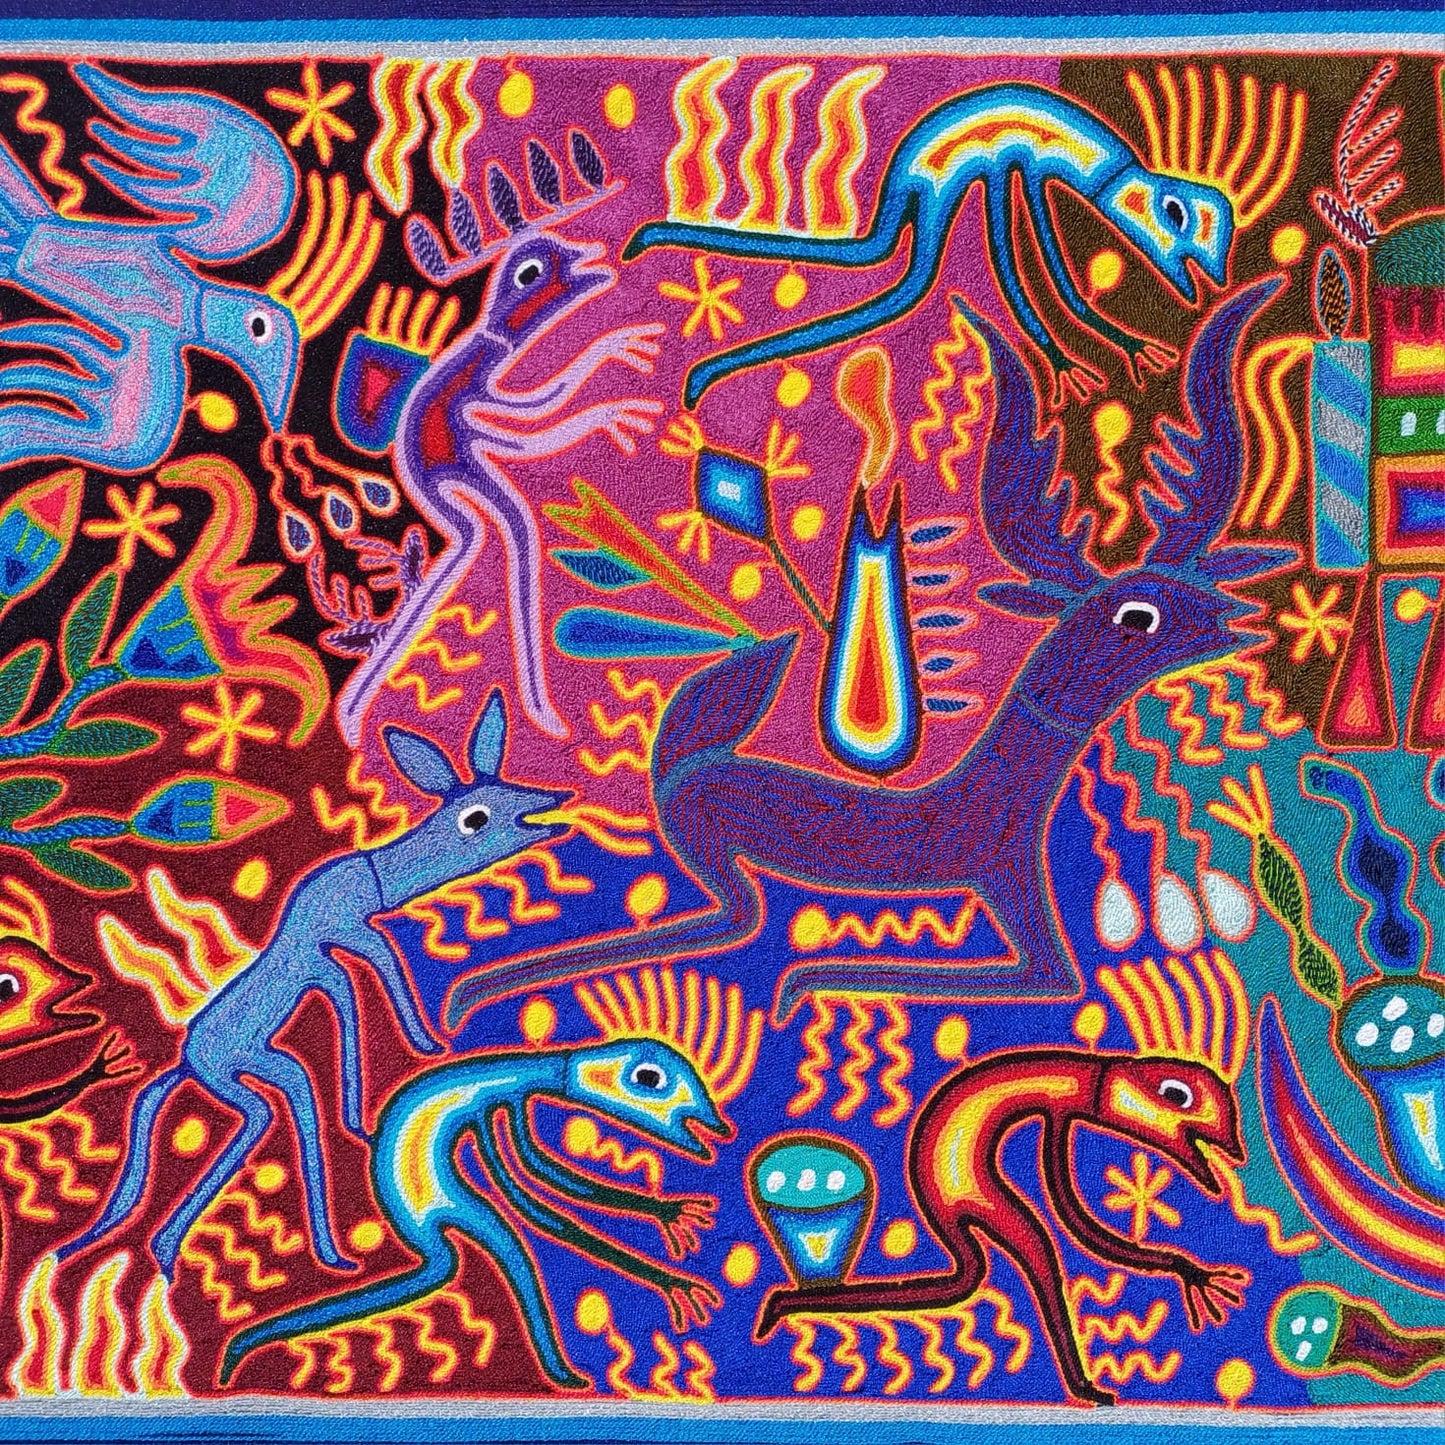 Huichol Yarn Painting Mexican Folk Art By Hilaria Chavez Carrillo PP7018